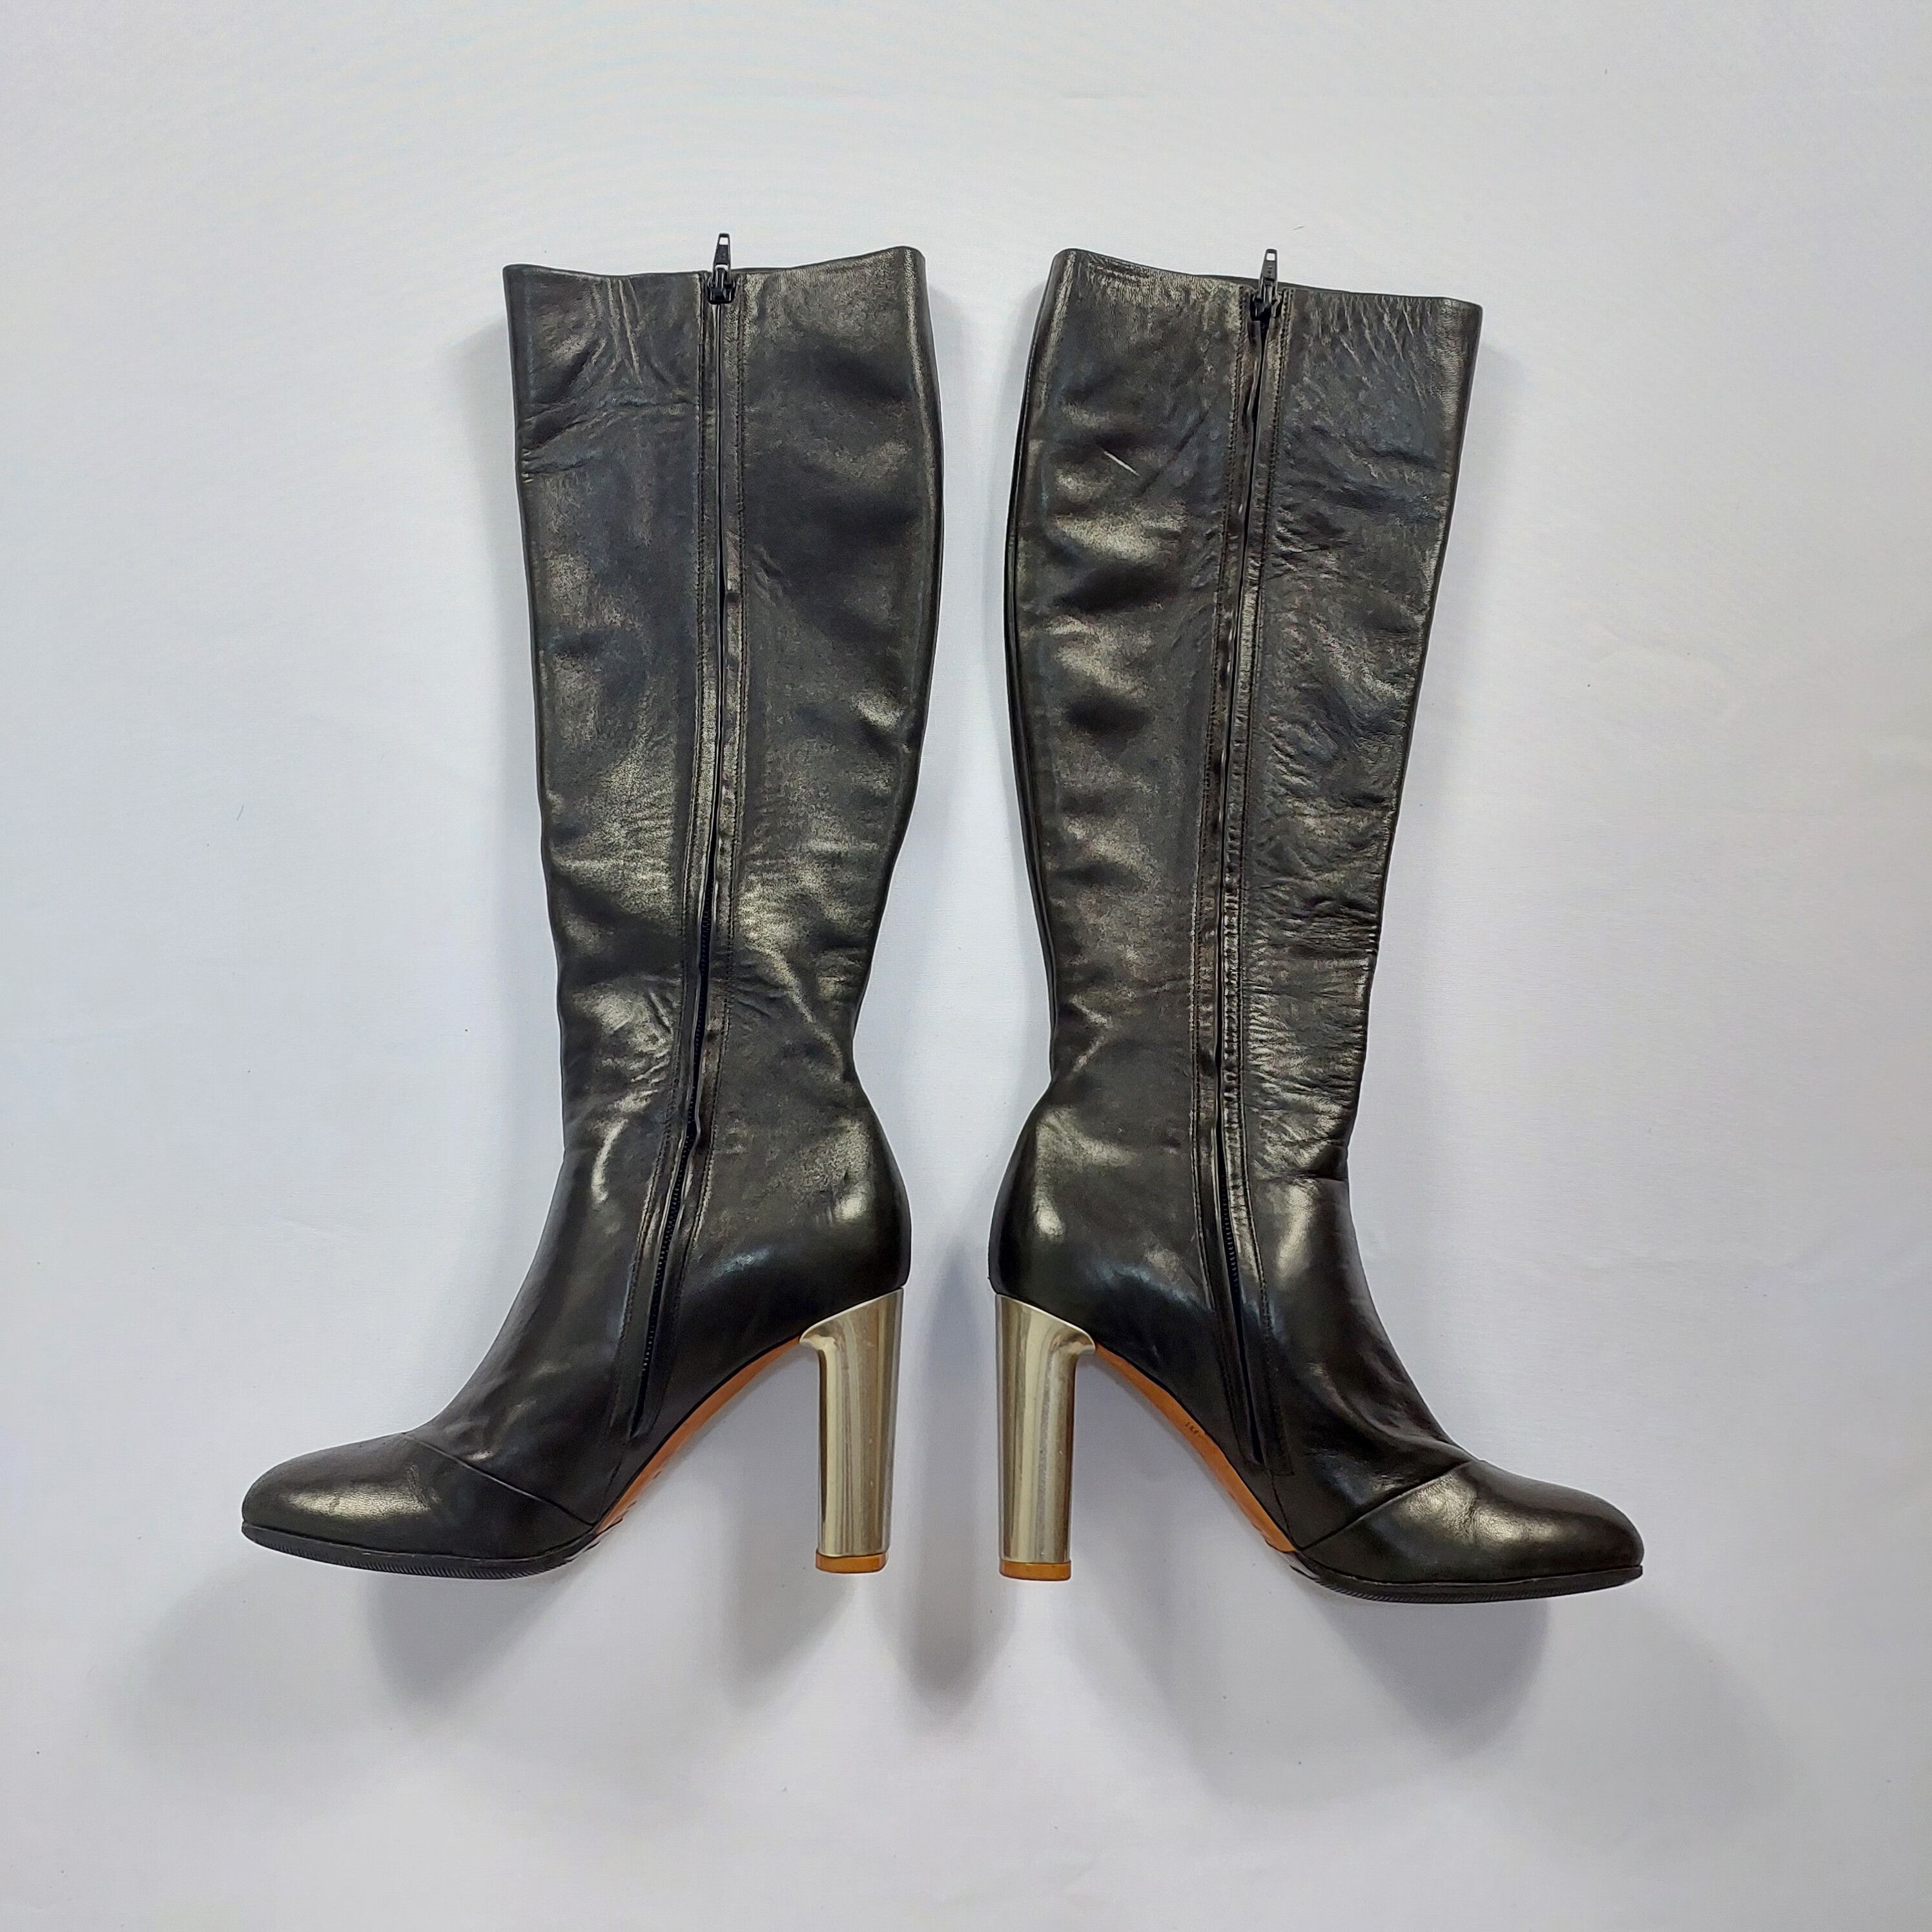 Celine - Phoebe Philo - Tall Boots - 2